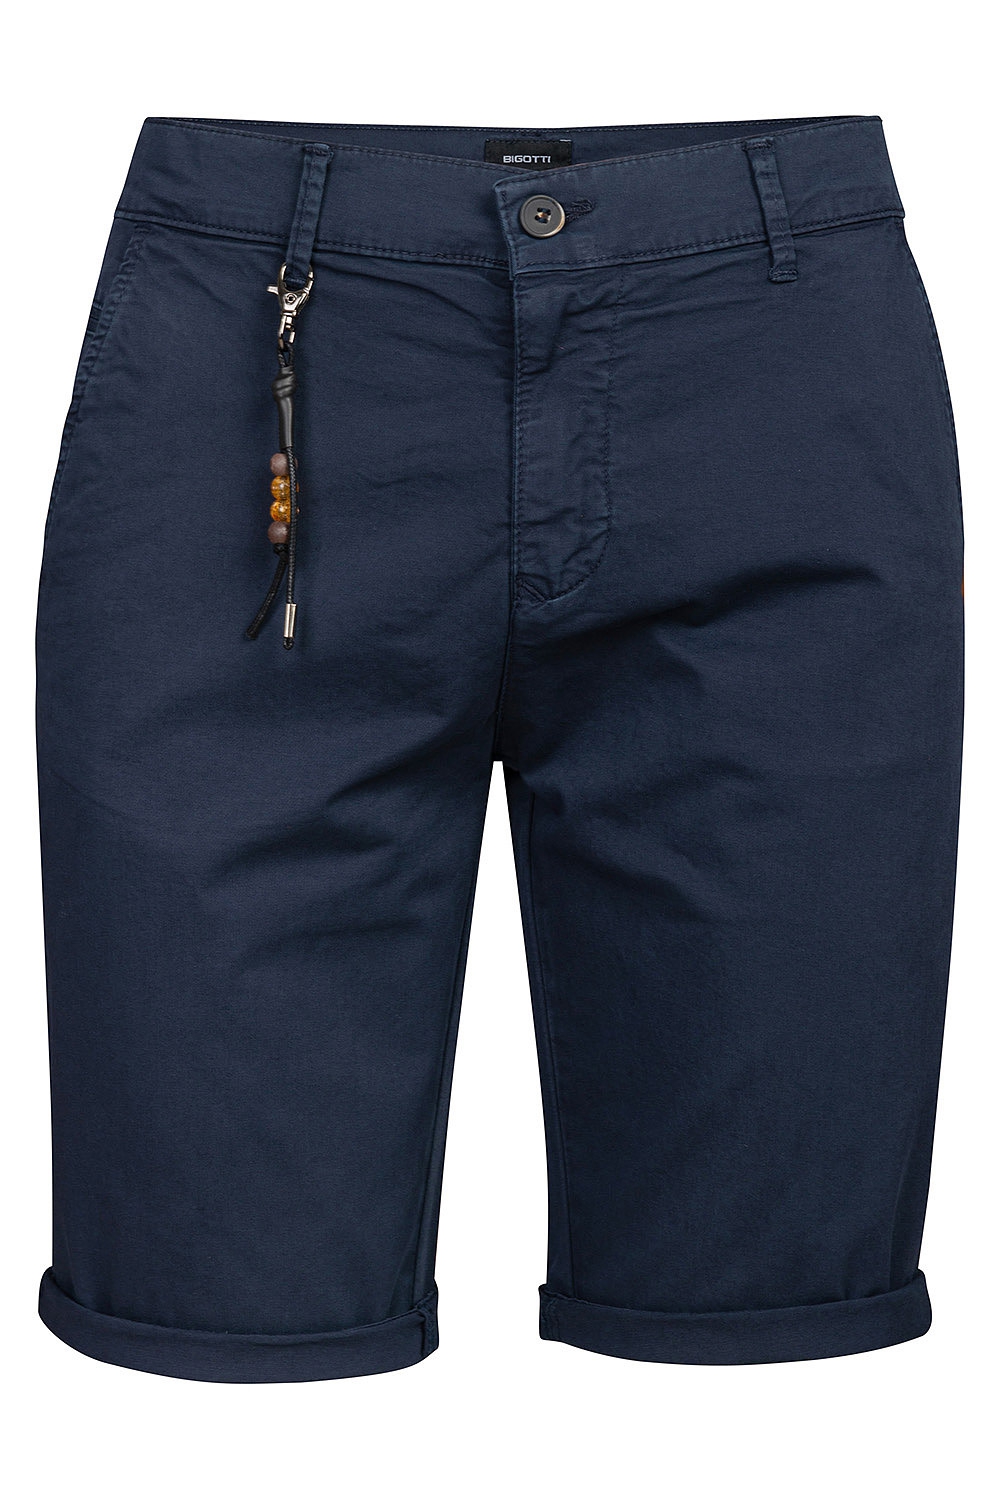 Pantaloni scurti bleumarin print geometric 0